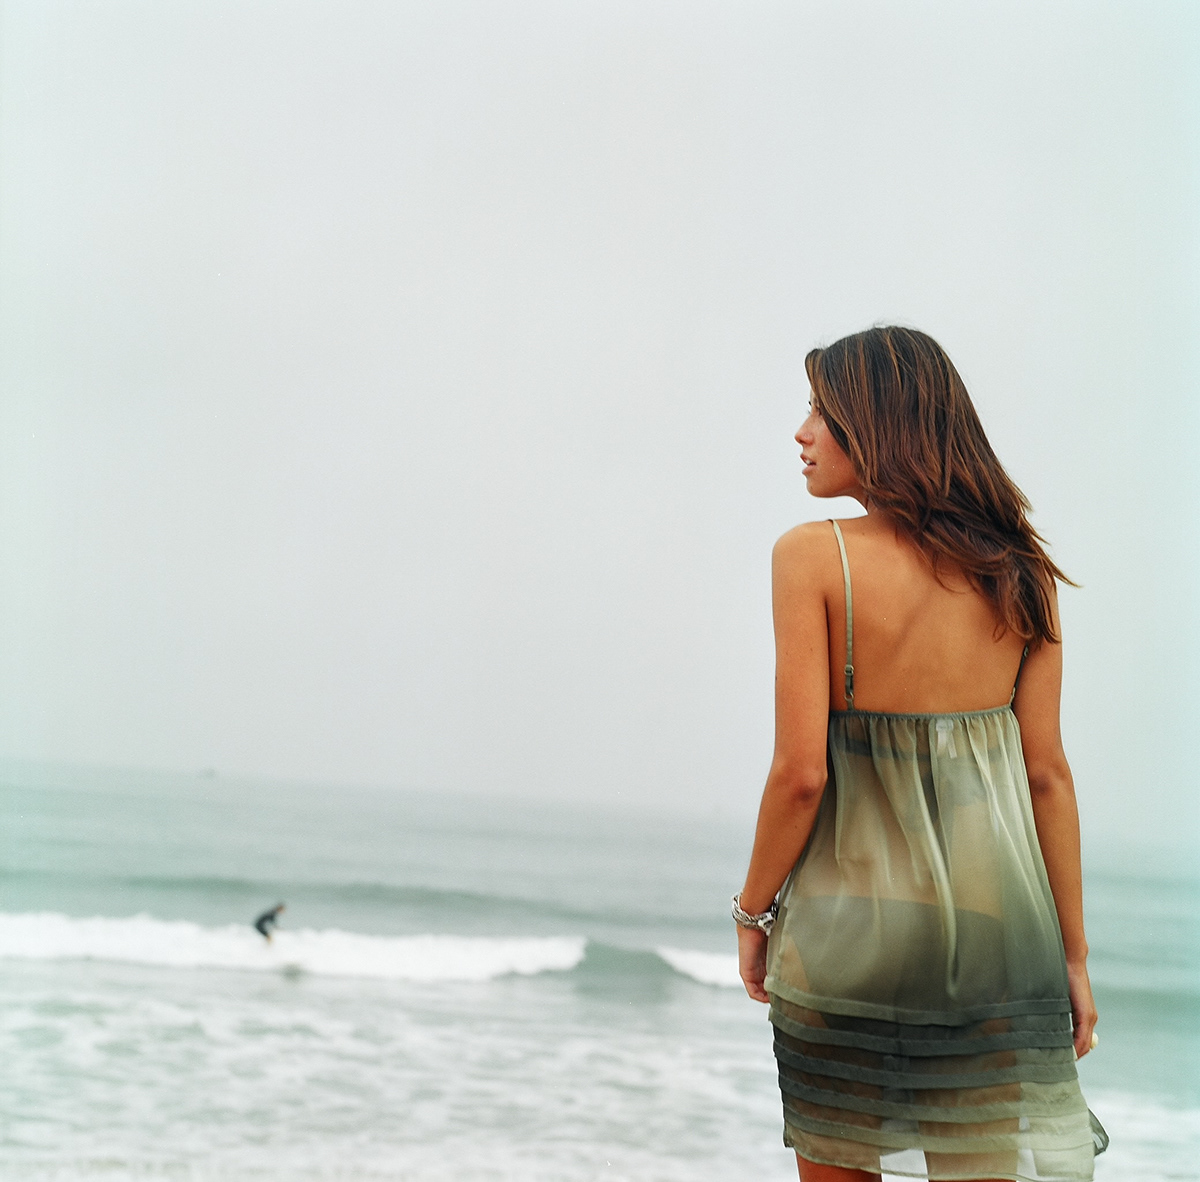 swimwear BEACHWEAR sasha gold prentice danner model beach Film Camera Hassleblad undisclosed